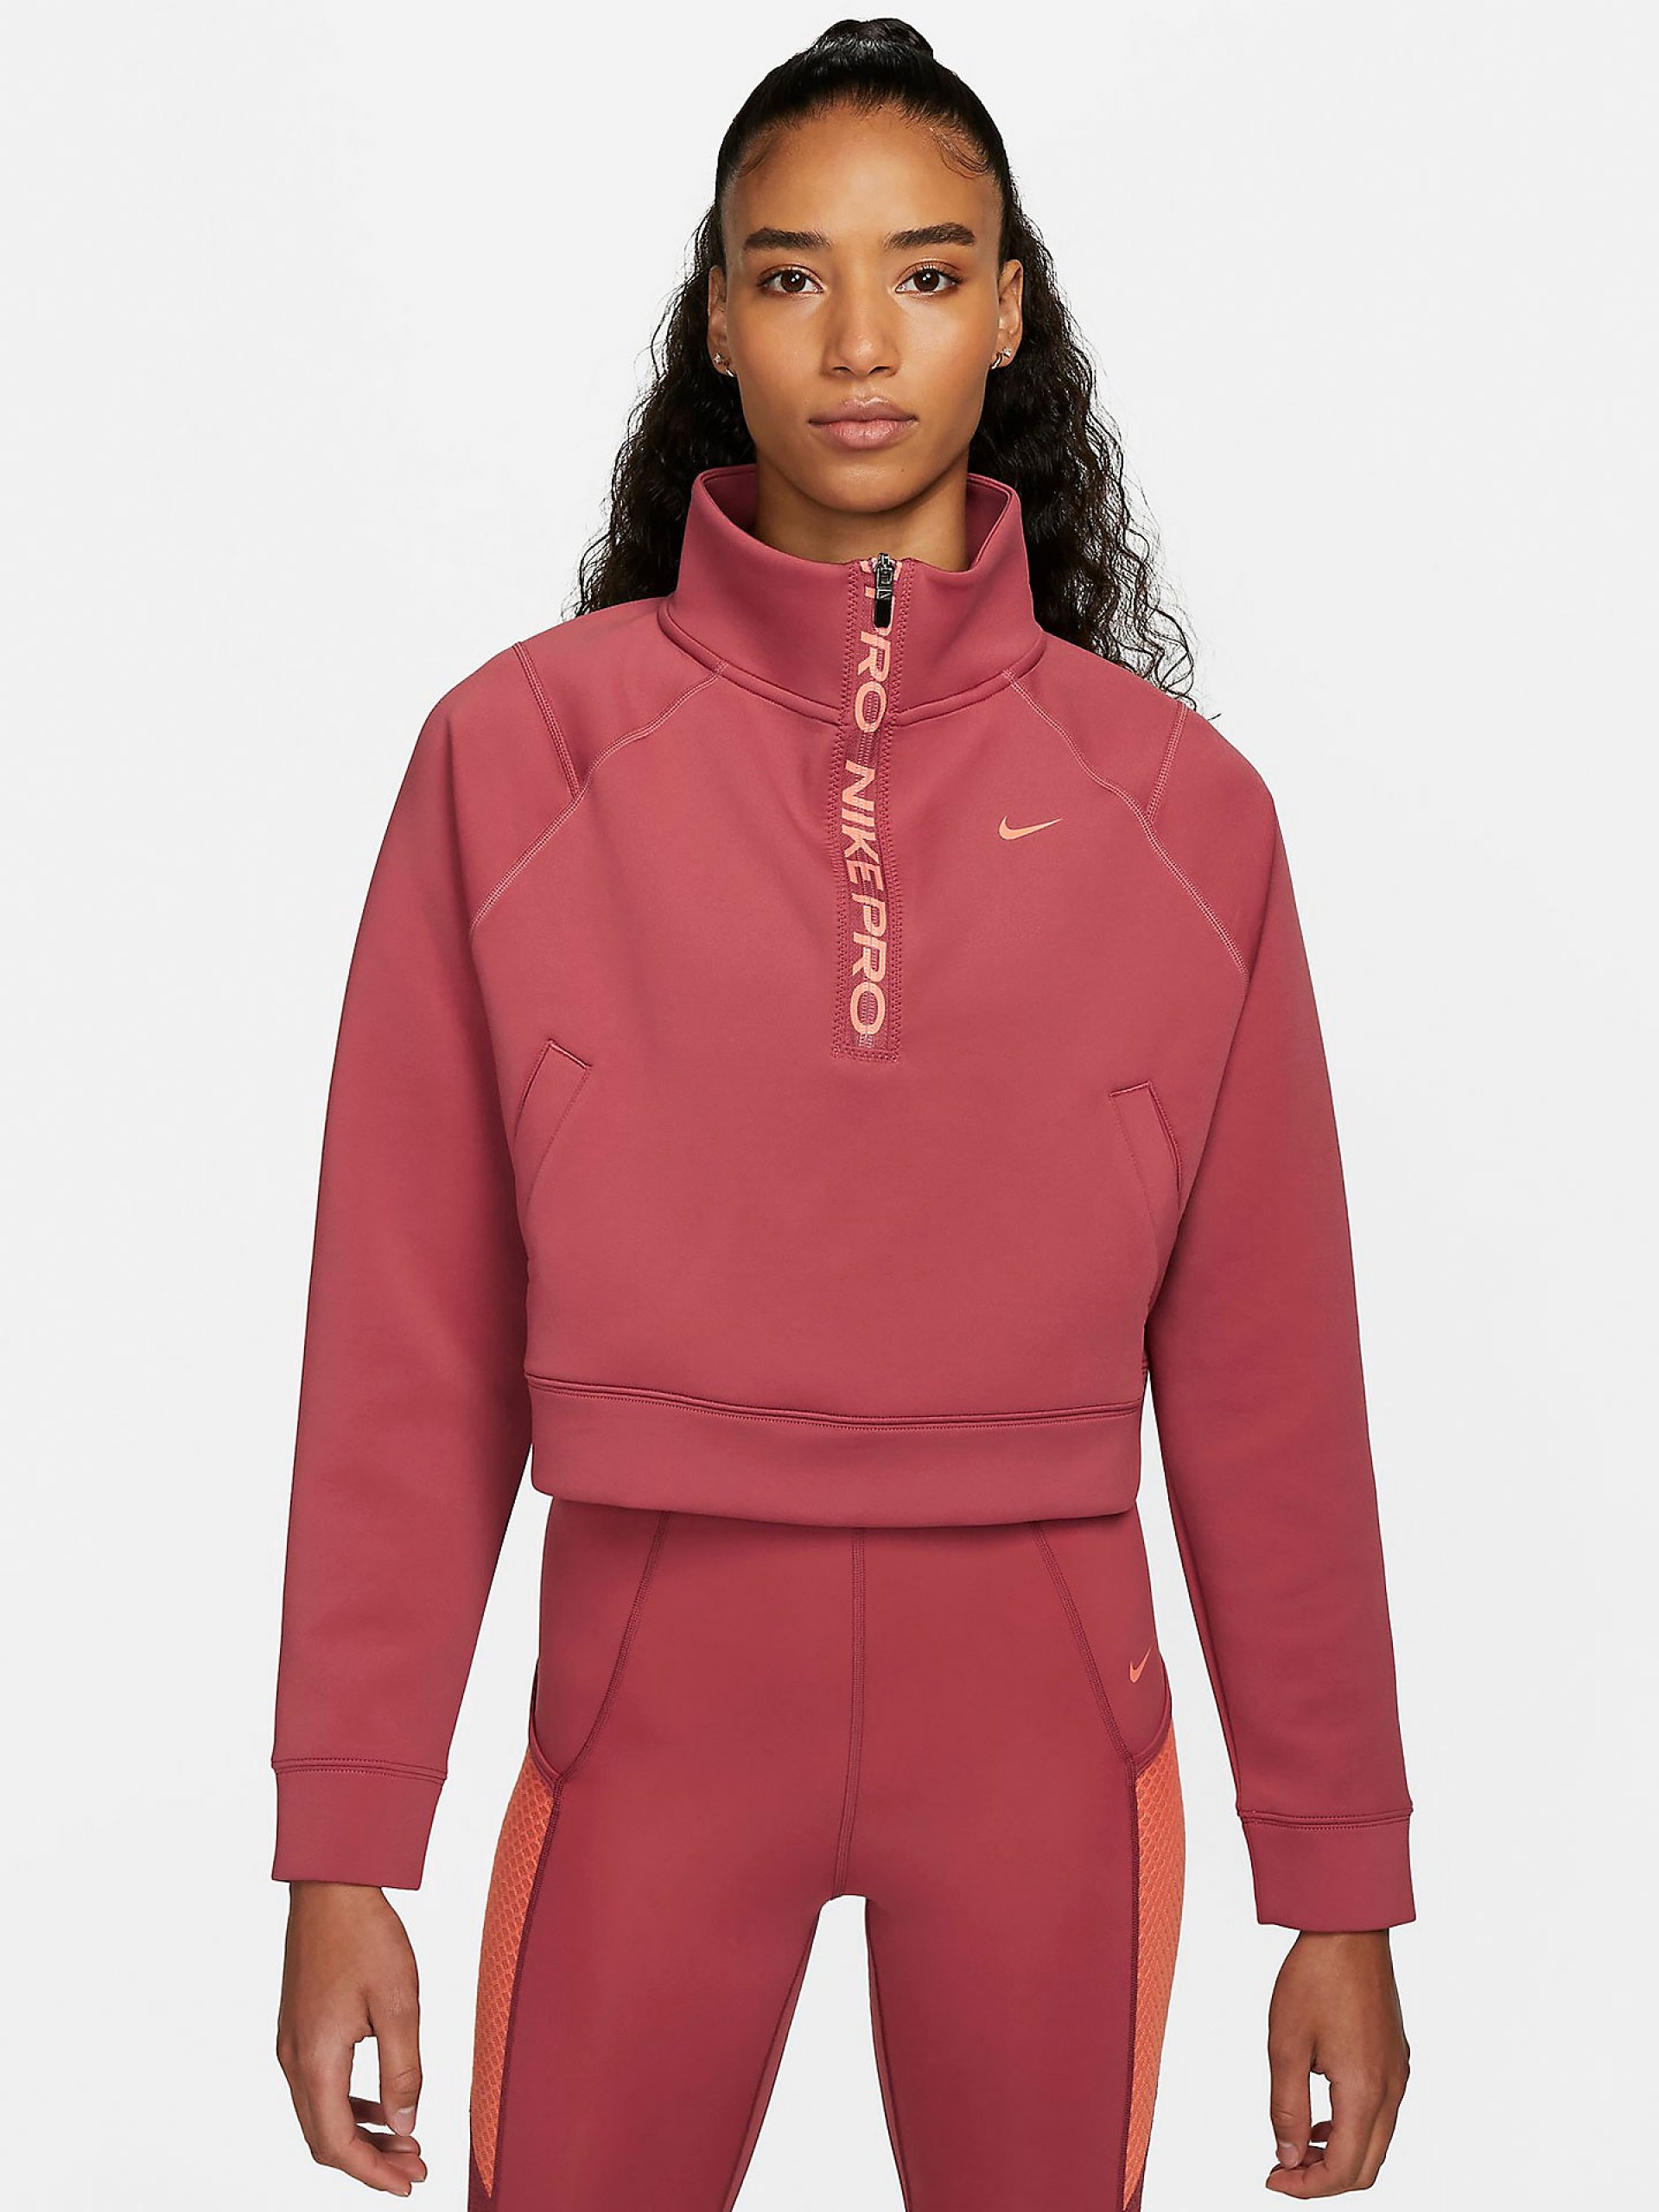 Camisola Nike Dri-FIT Zip